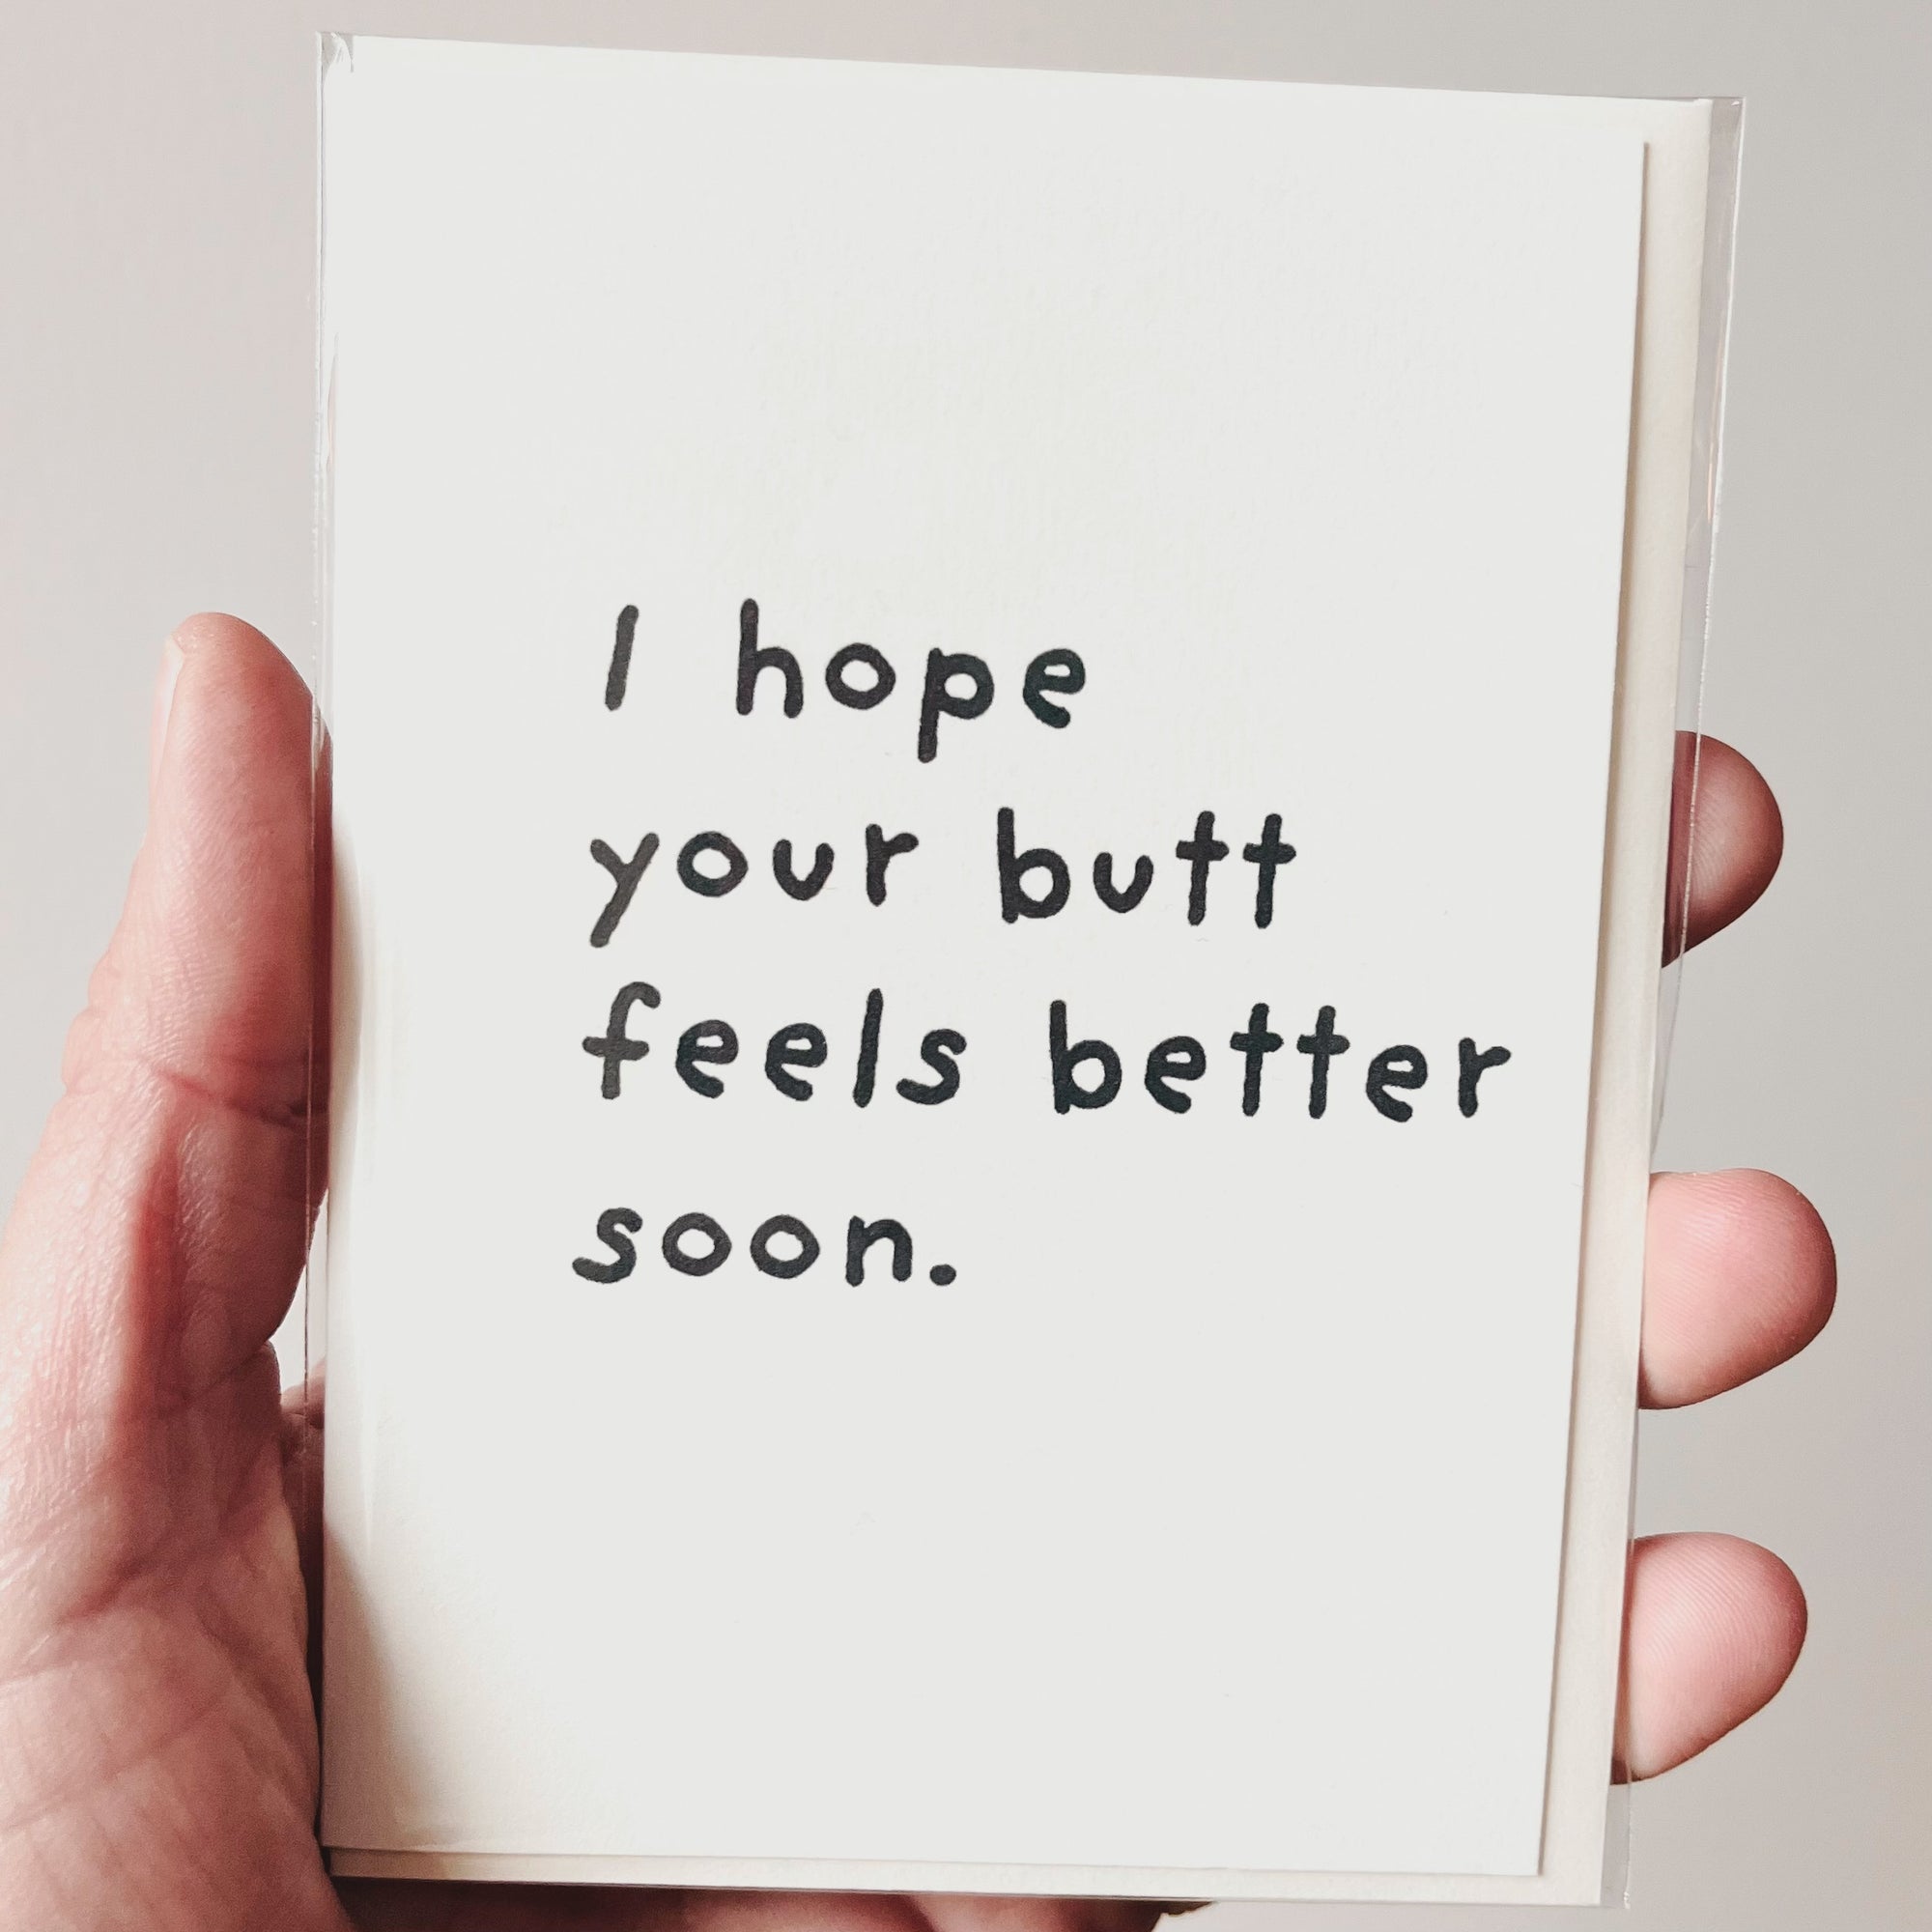 I hope your butt feels better soon.